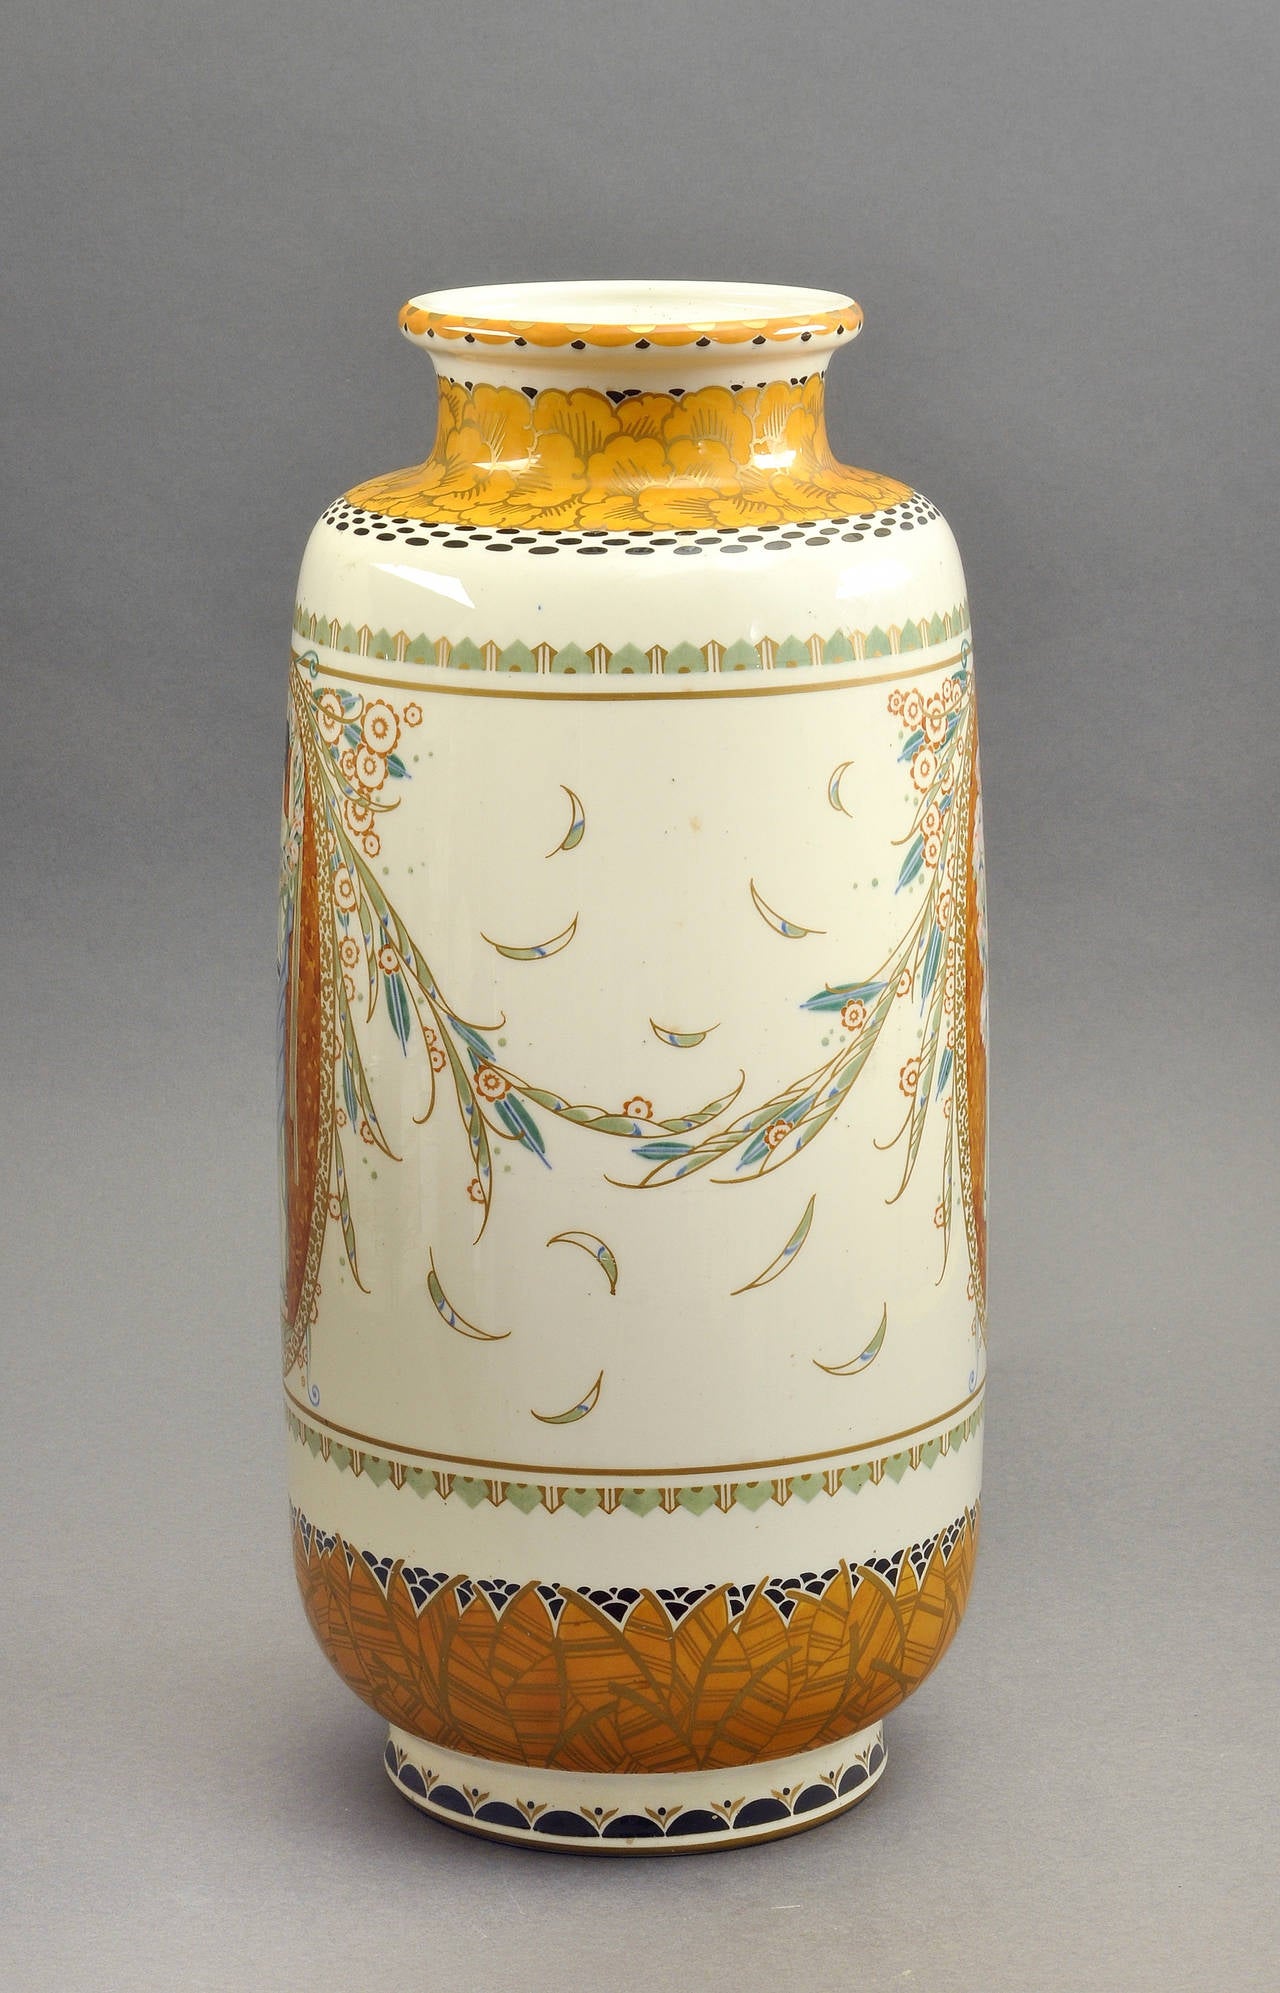 Highly Important 1924 Manufacture Nationale de Sèvres Porcelain Vase In Excellent Condition For Sale In Paris, FR